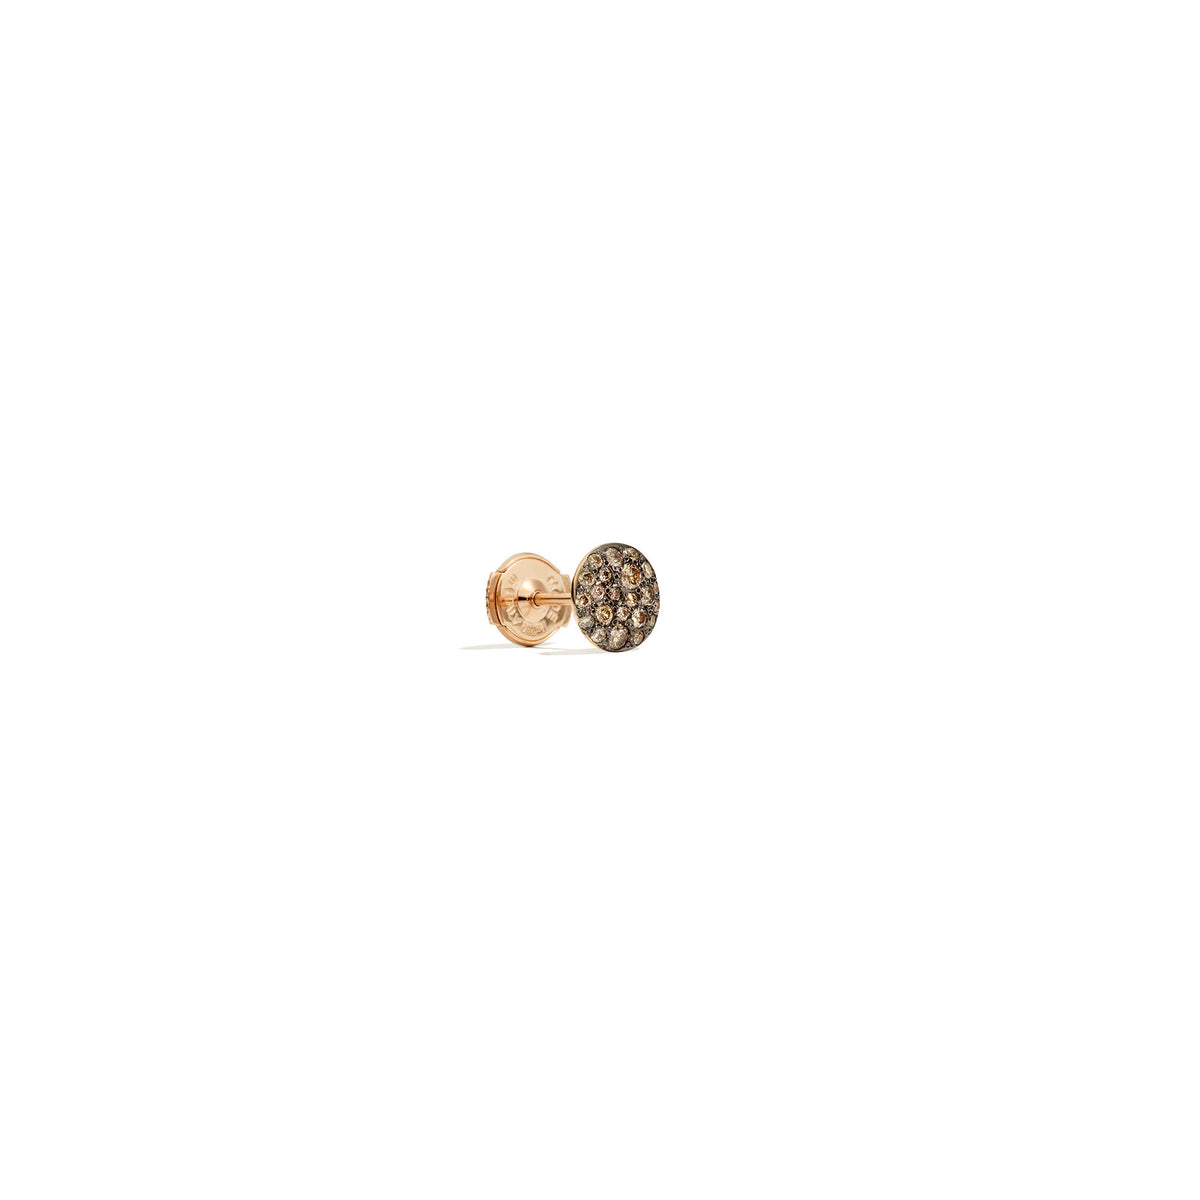 Sabbia Stud Earrings in 18k Rose Gold with Brown Diamonds - Orsini Jewellers NZ